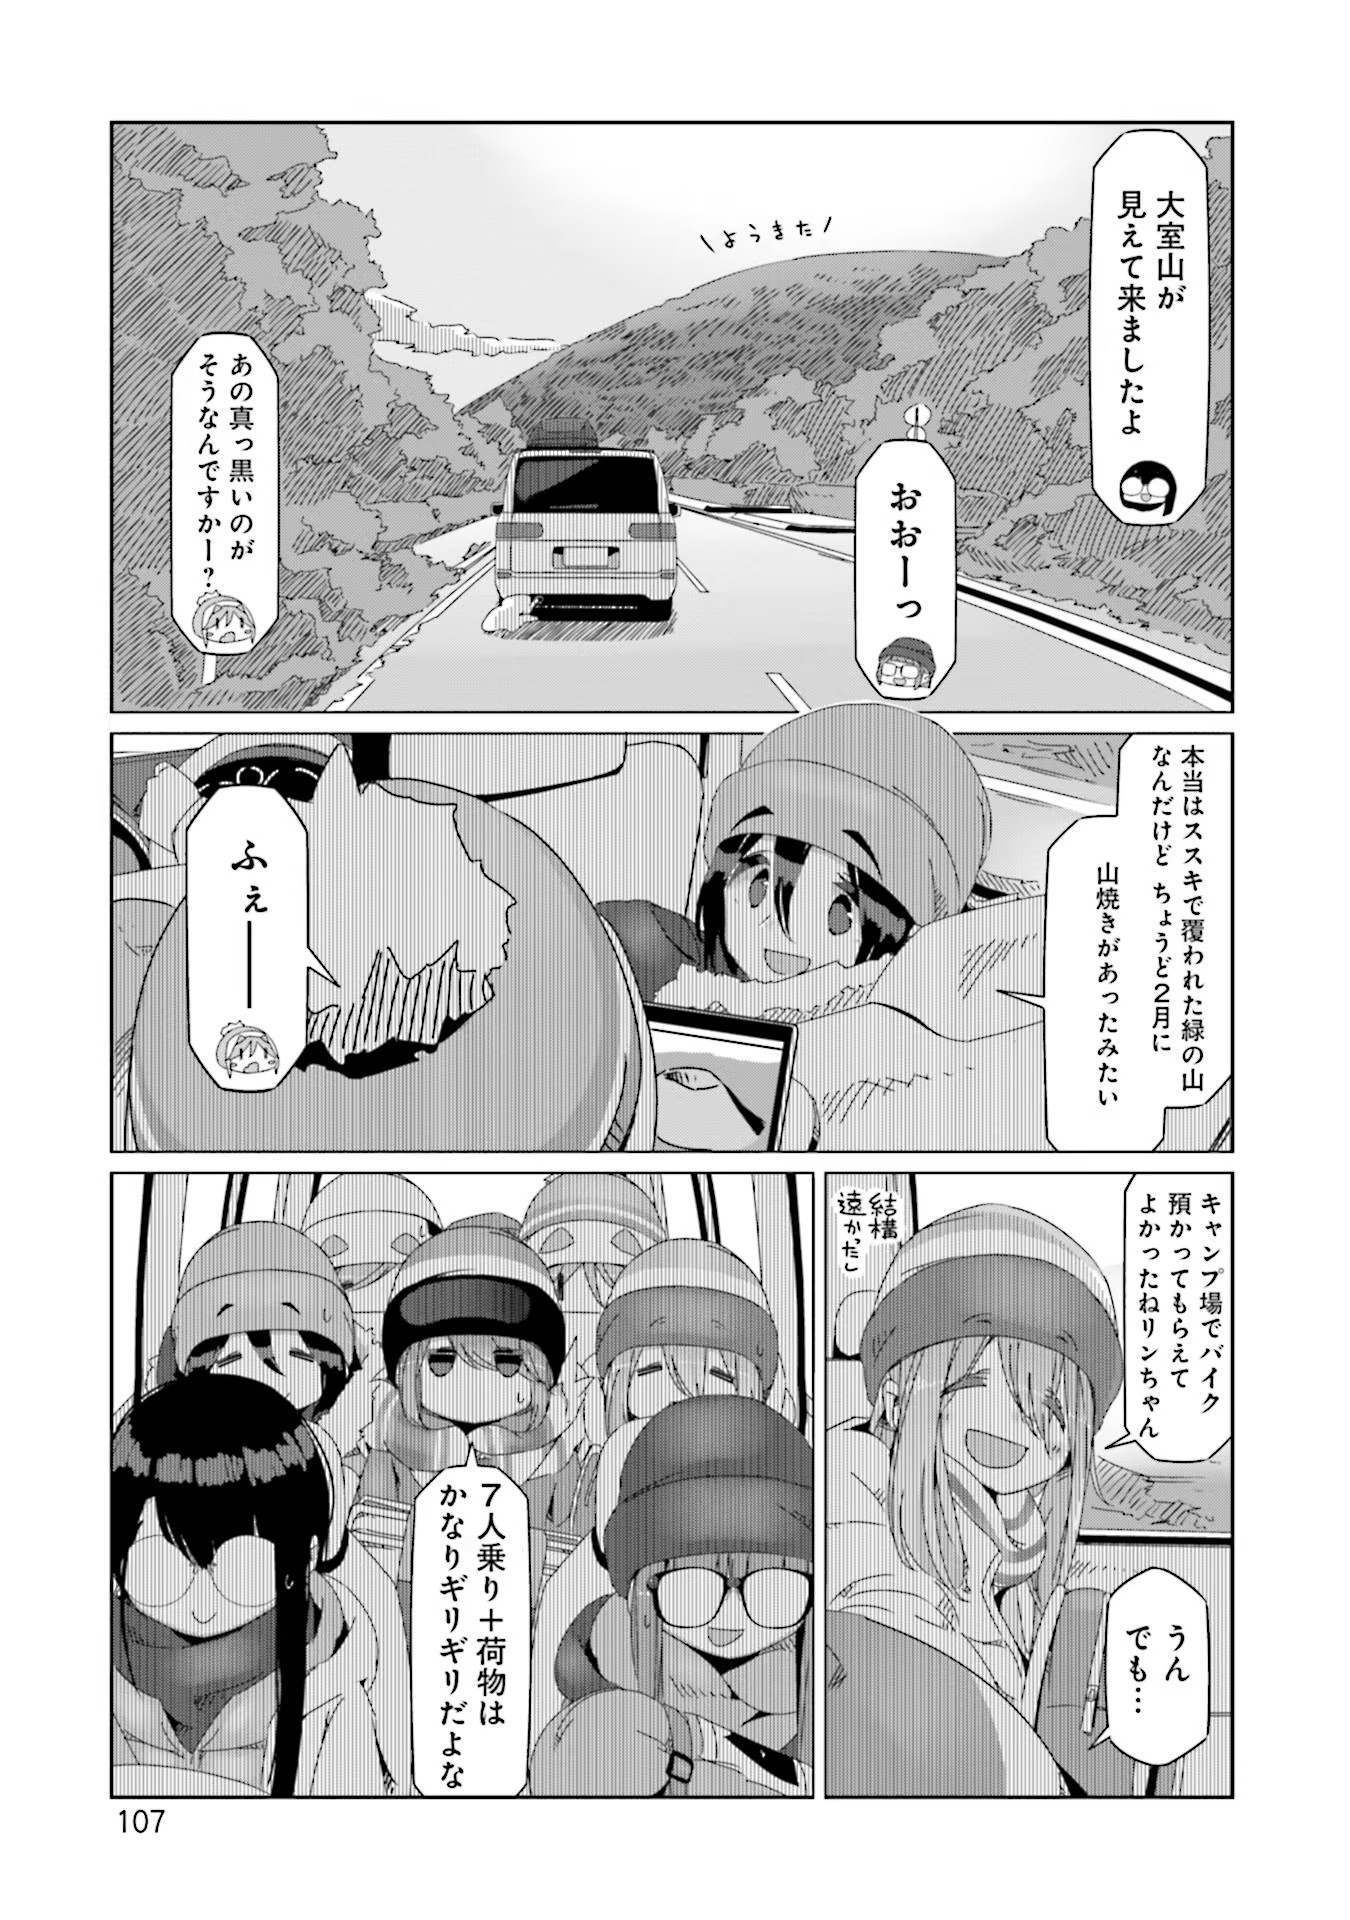 Yuru Camp - Chapter 51 - Page 1